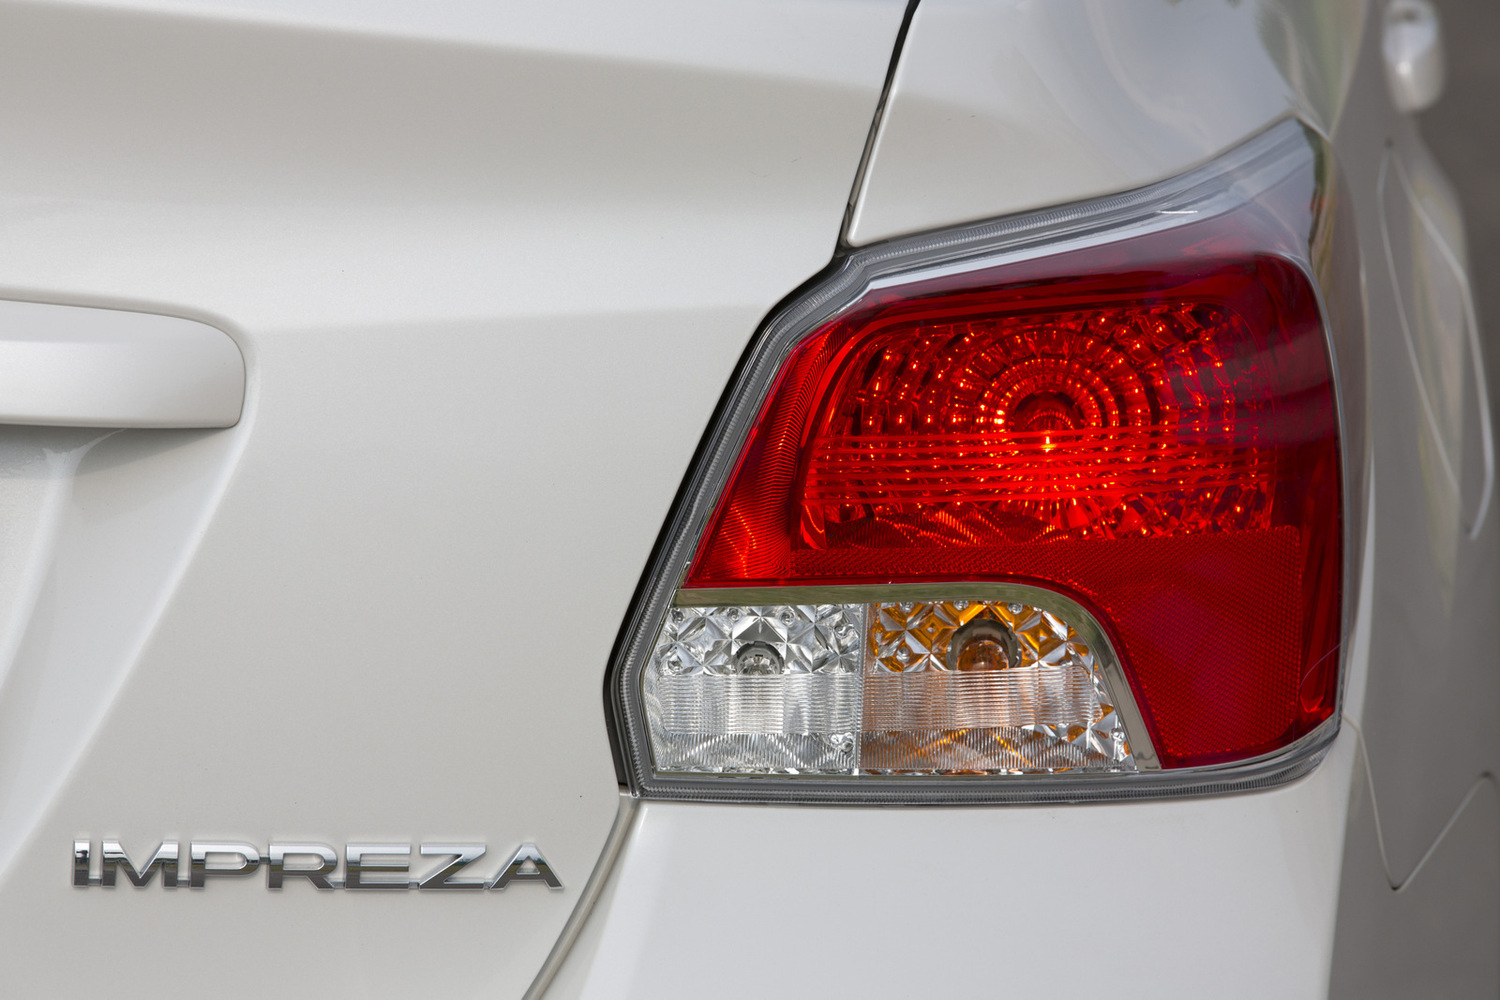 седан Subaru Impreza 2012 - 2014г выпуска модификация 1.6 MT (114 л.с.) 4×4